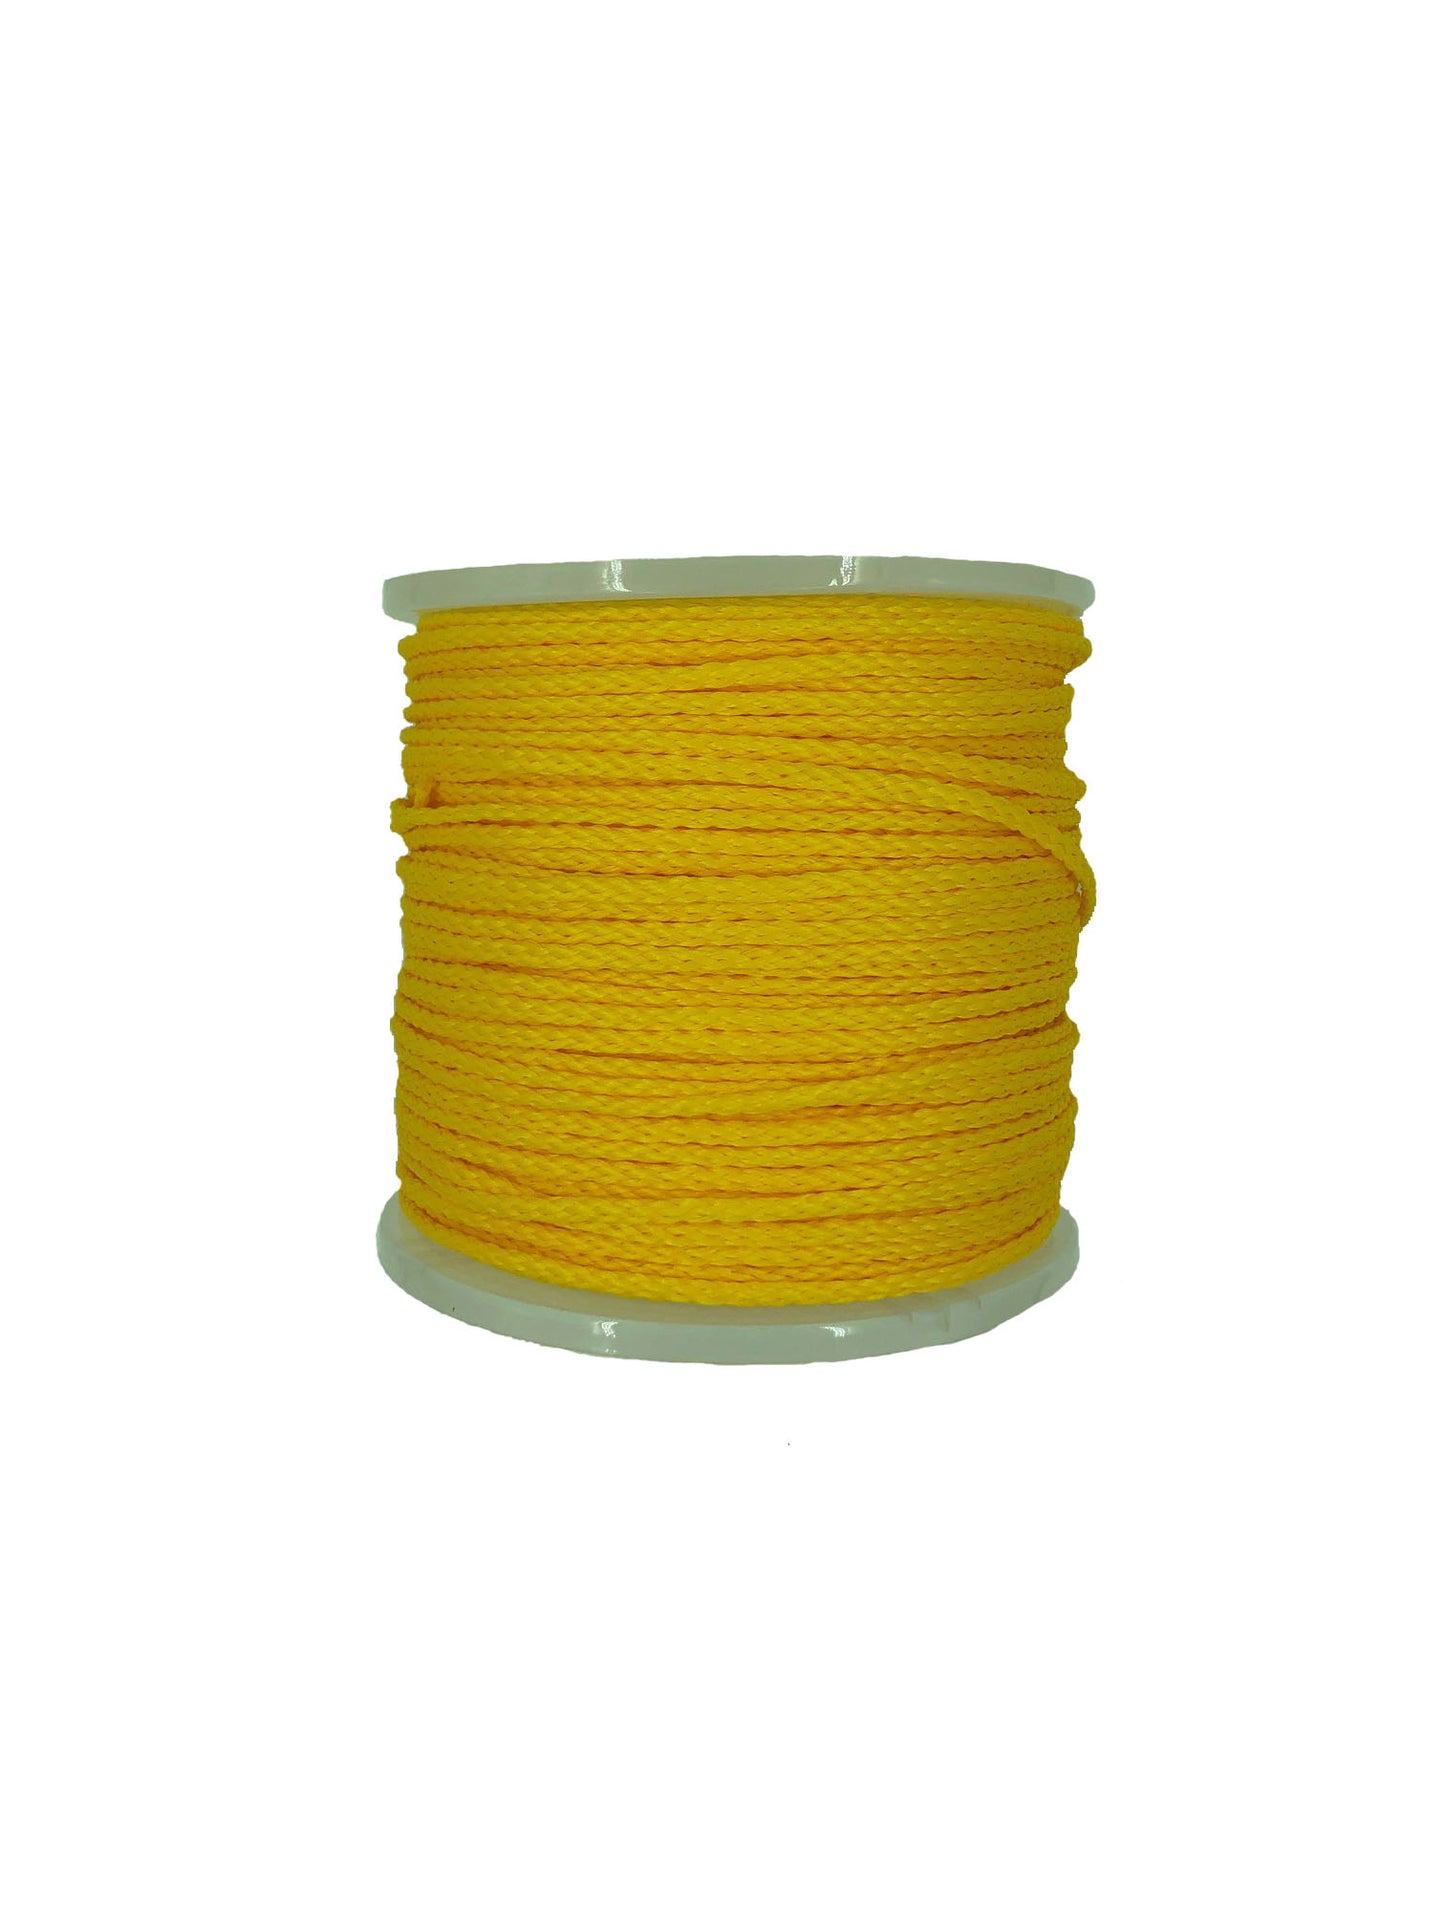 3/8" X 1000' Yellow Hollow Braid Polypropylene Rope